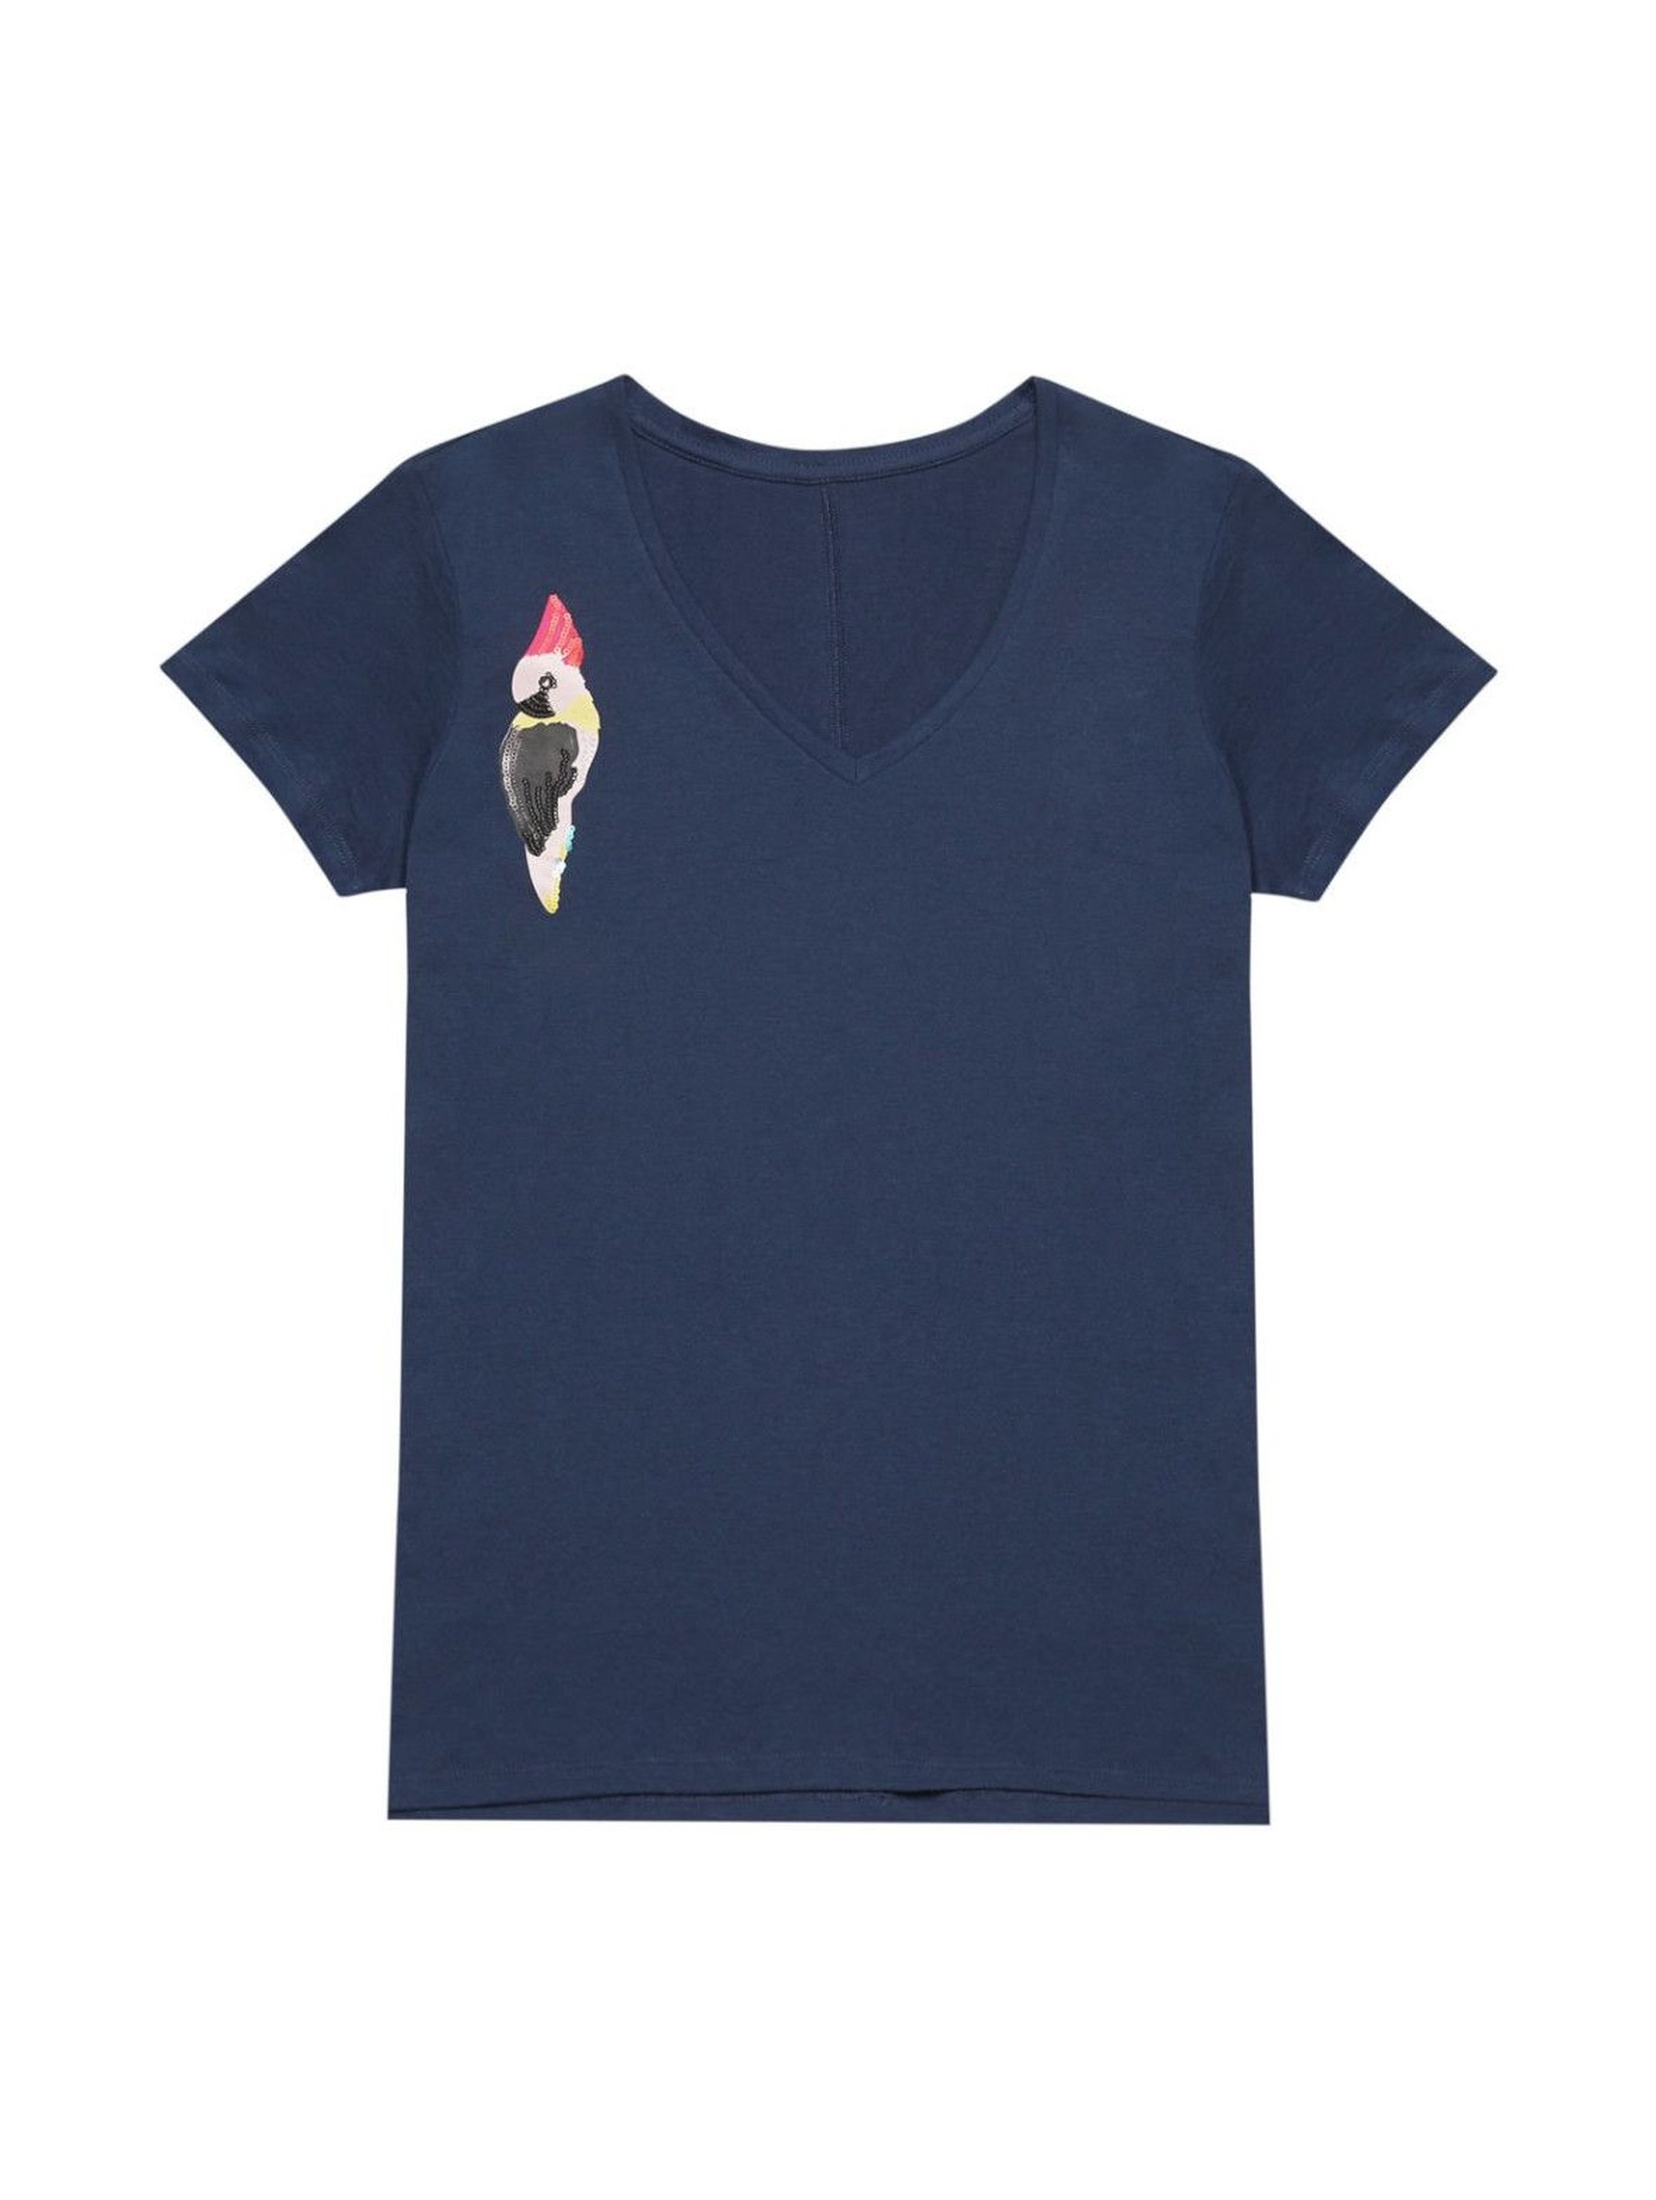 T-shirt damski granatowy z nadrukiem papugi